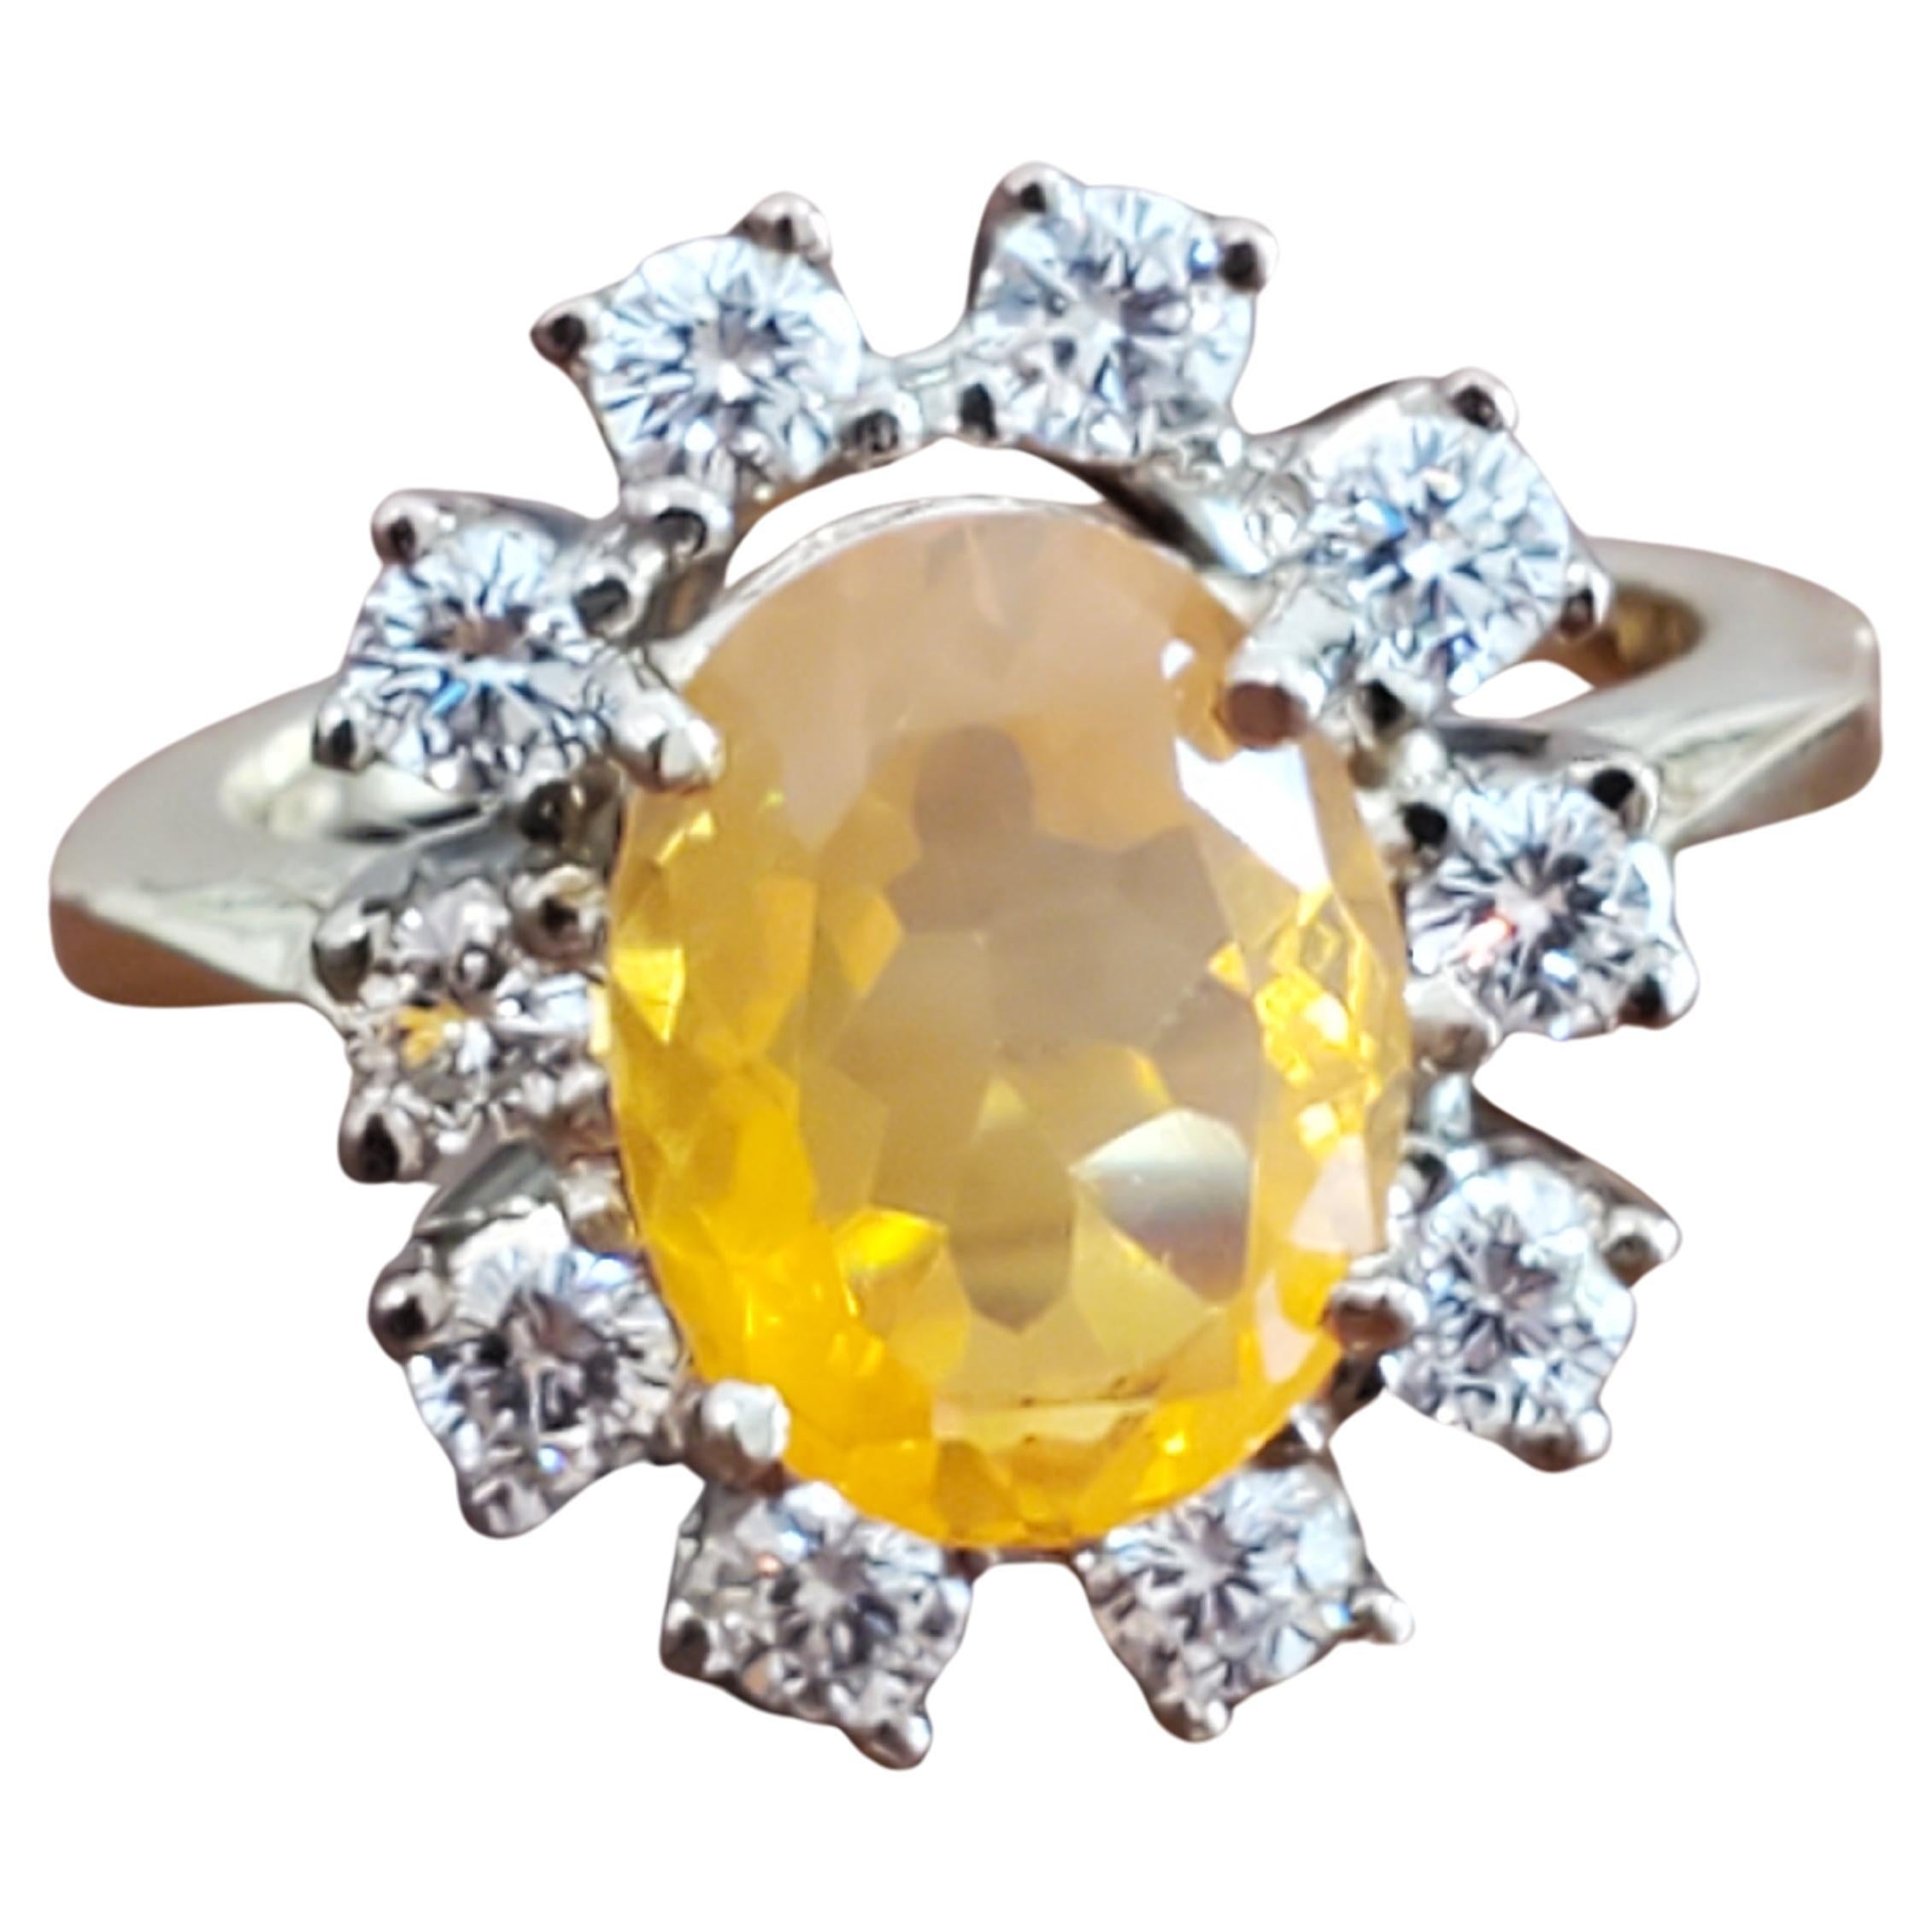 Opale de feu, halo de diamants incolores VS, or jaune 18 carats